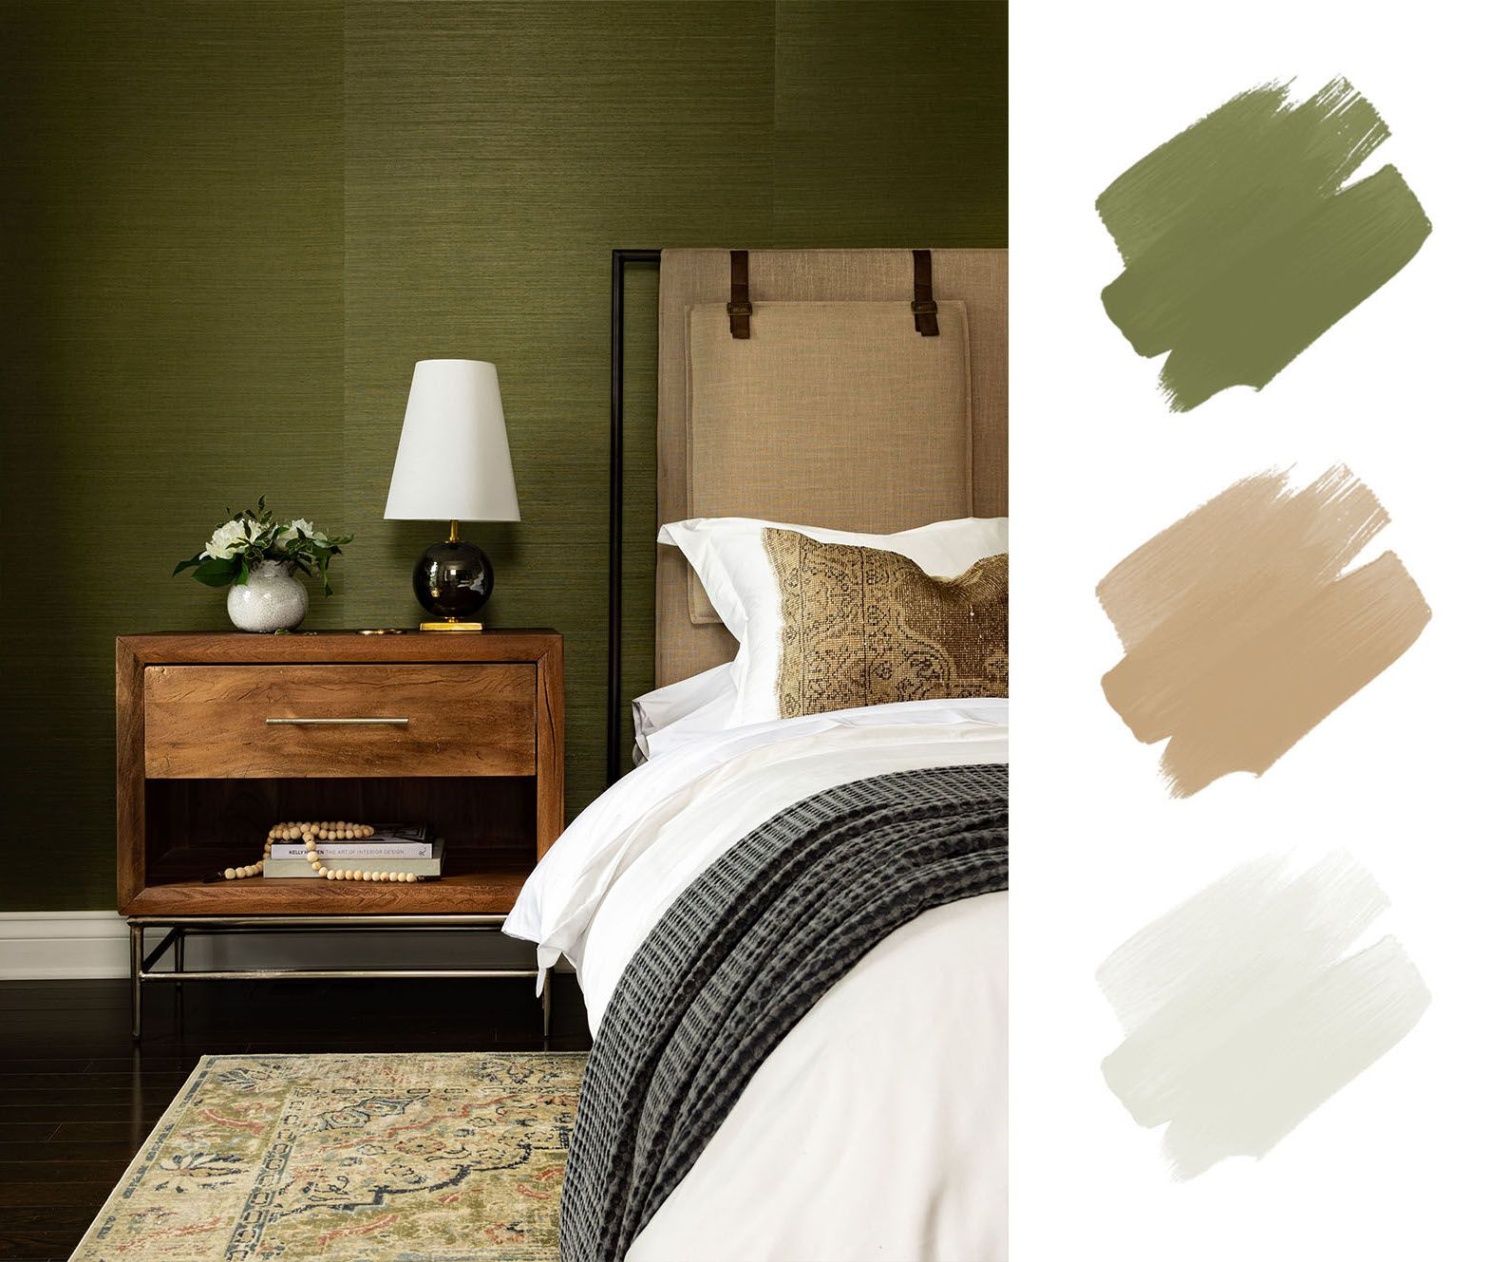 Discover Fresh Interior Design Color Schemes To Transform Your Space!